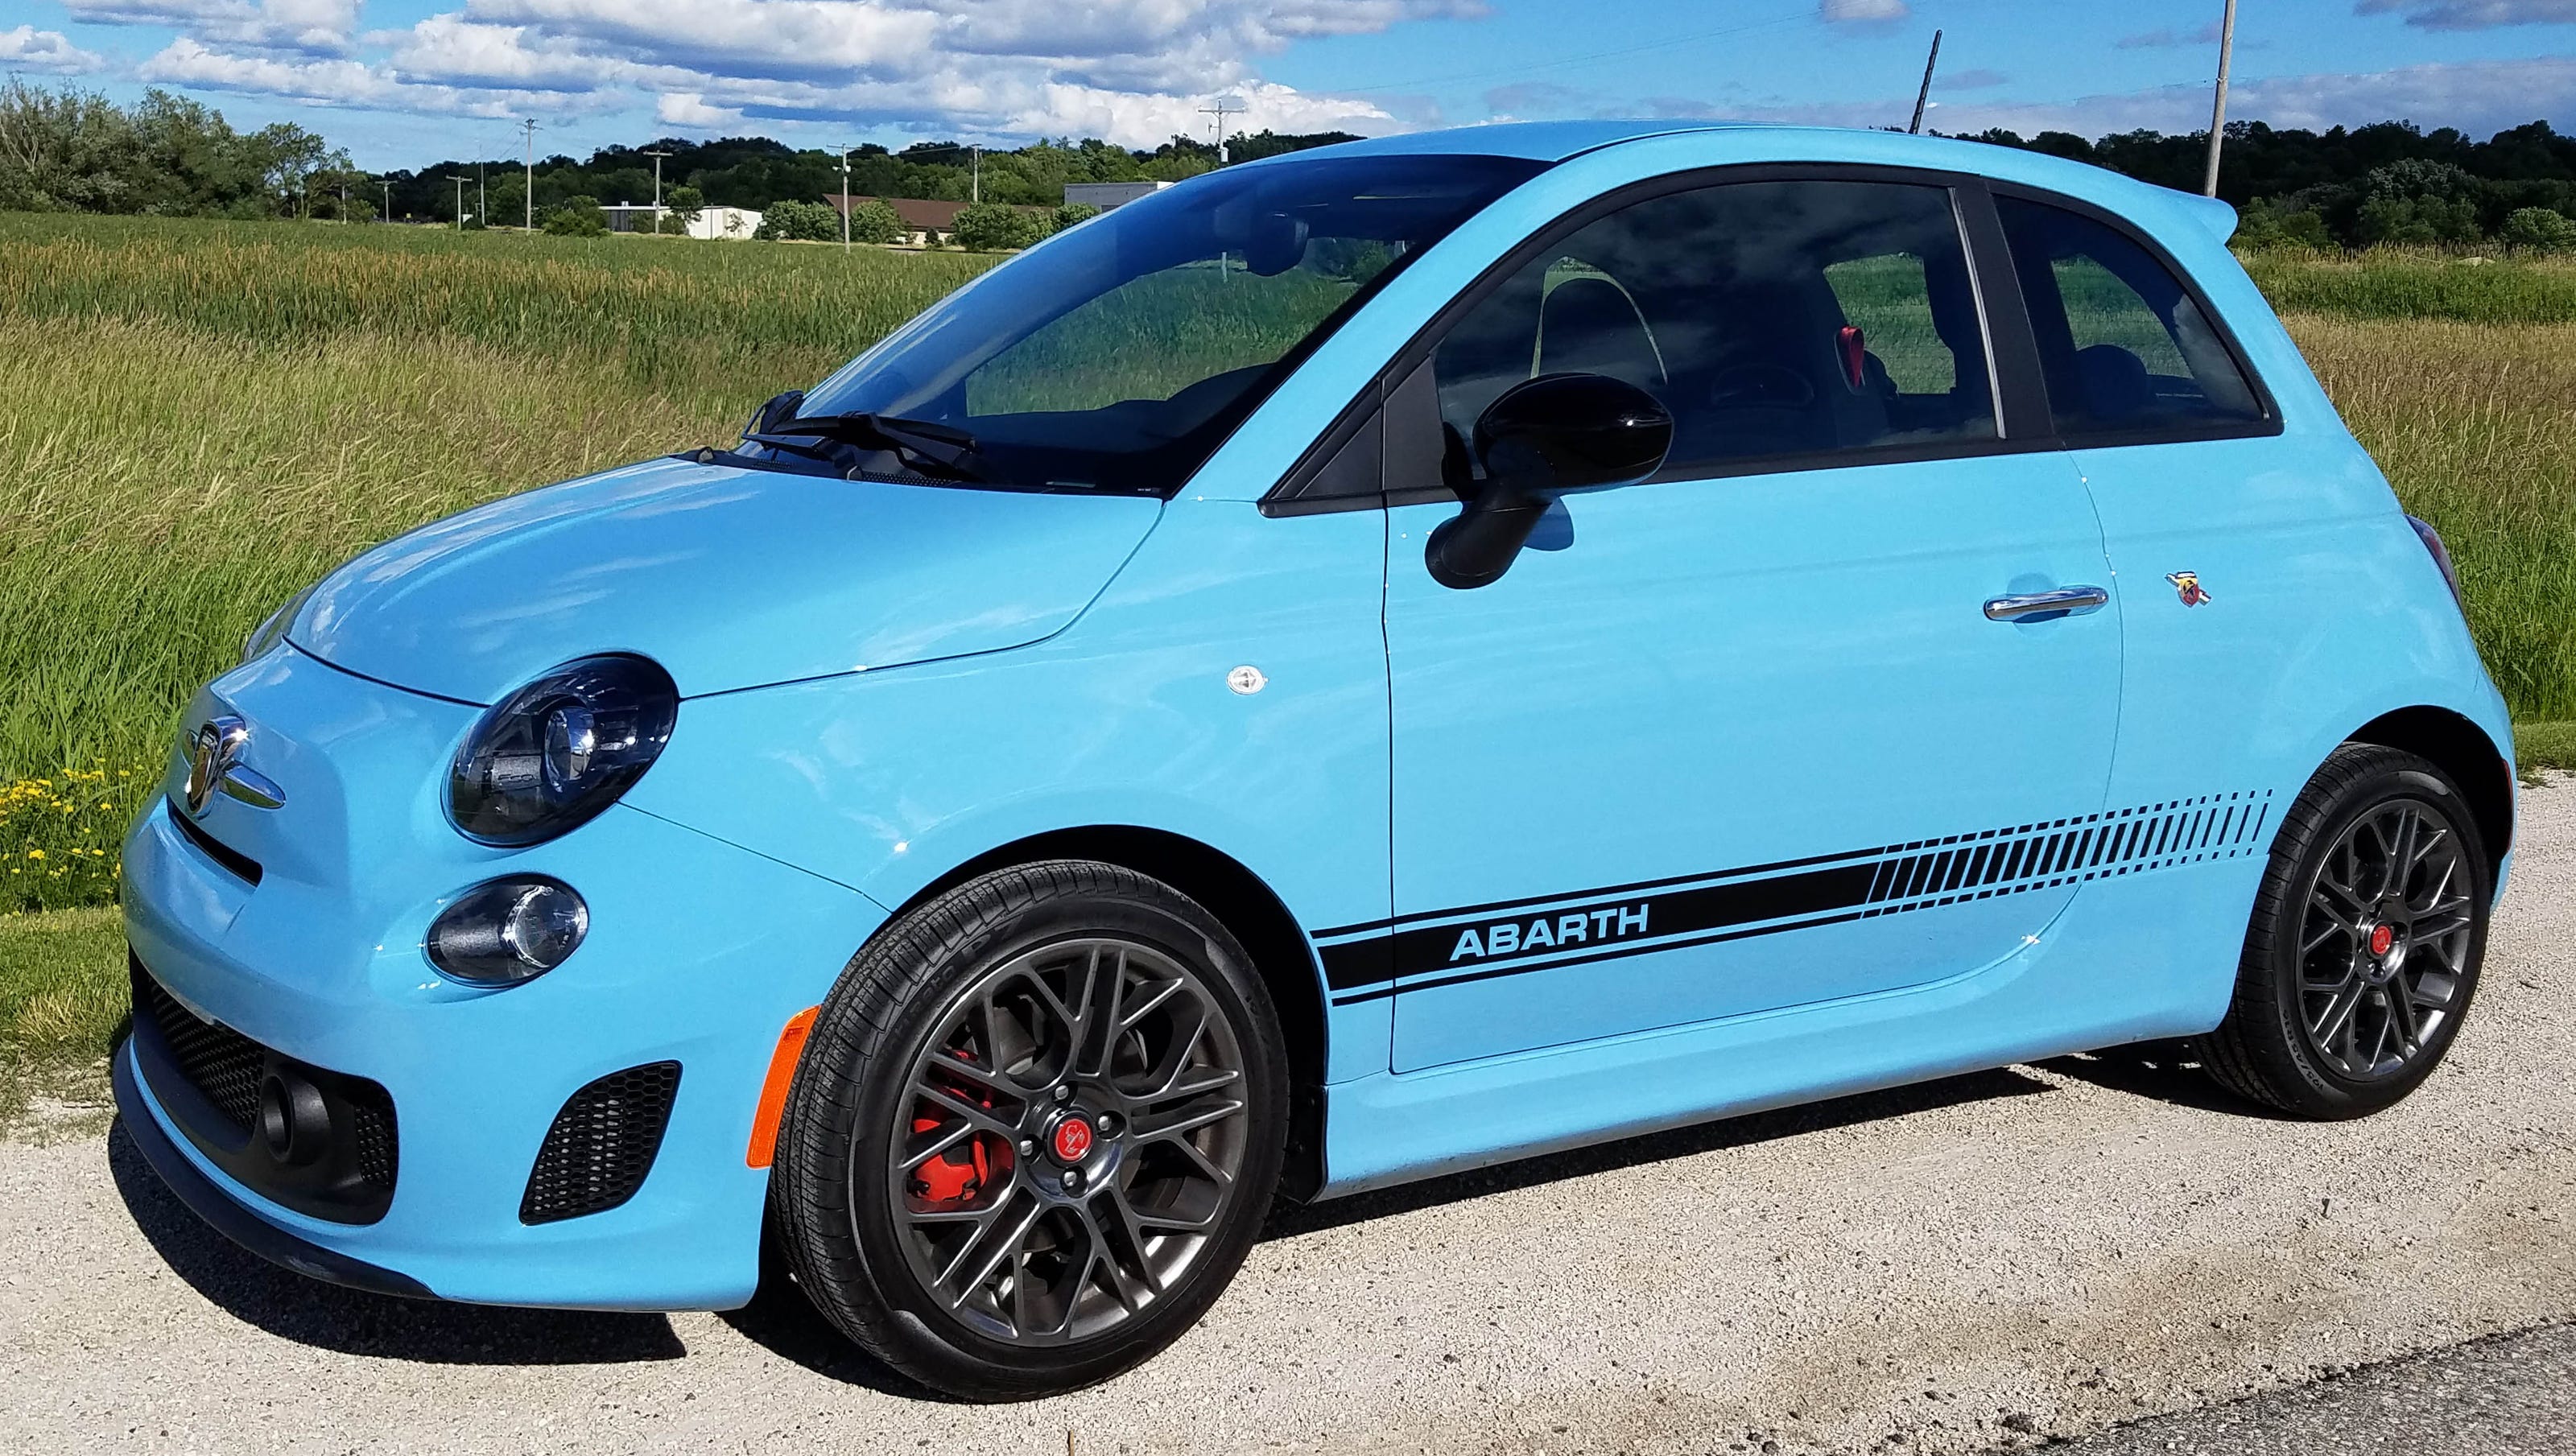 landheer zoeken uitbreiden Savage: At $21,000, Fiat 500 Abarth is a tiny, bargain-priced joy